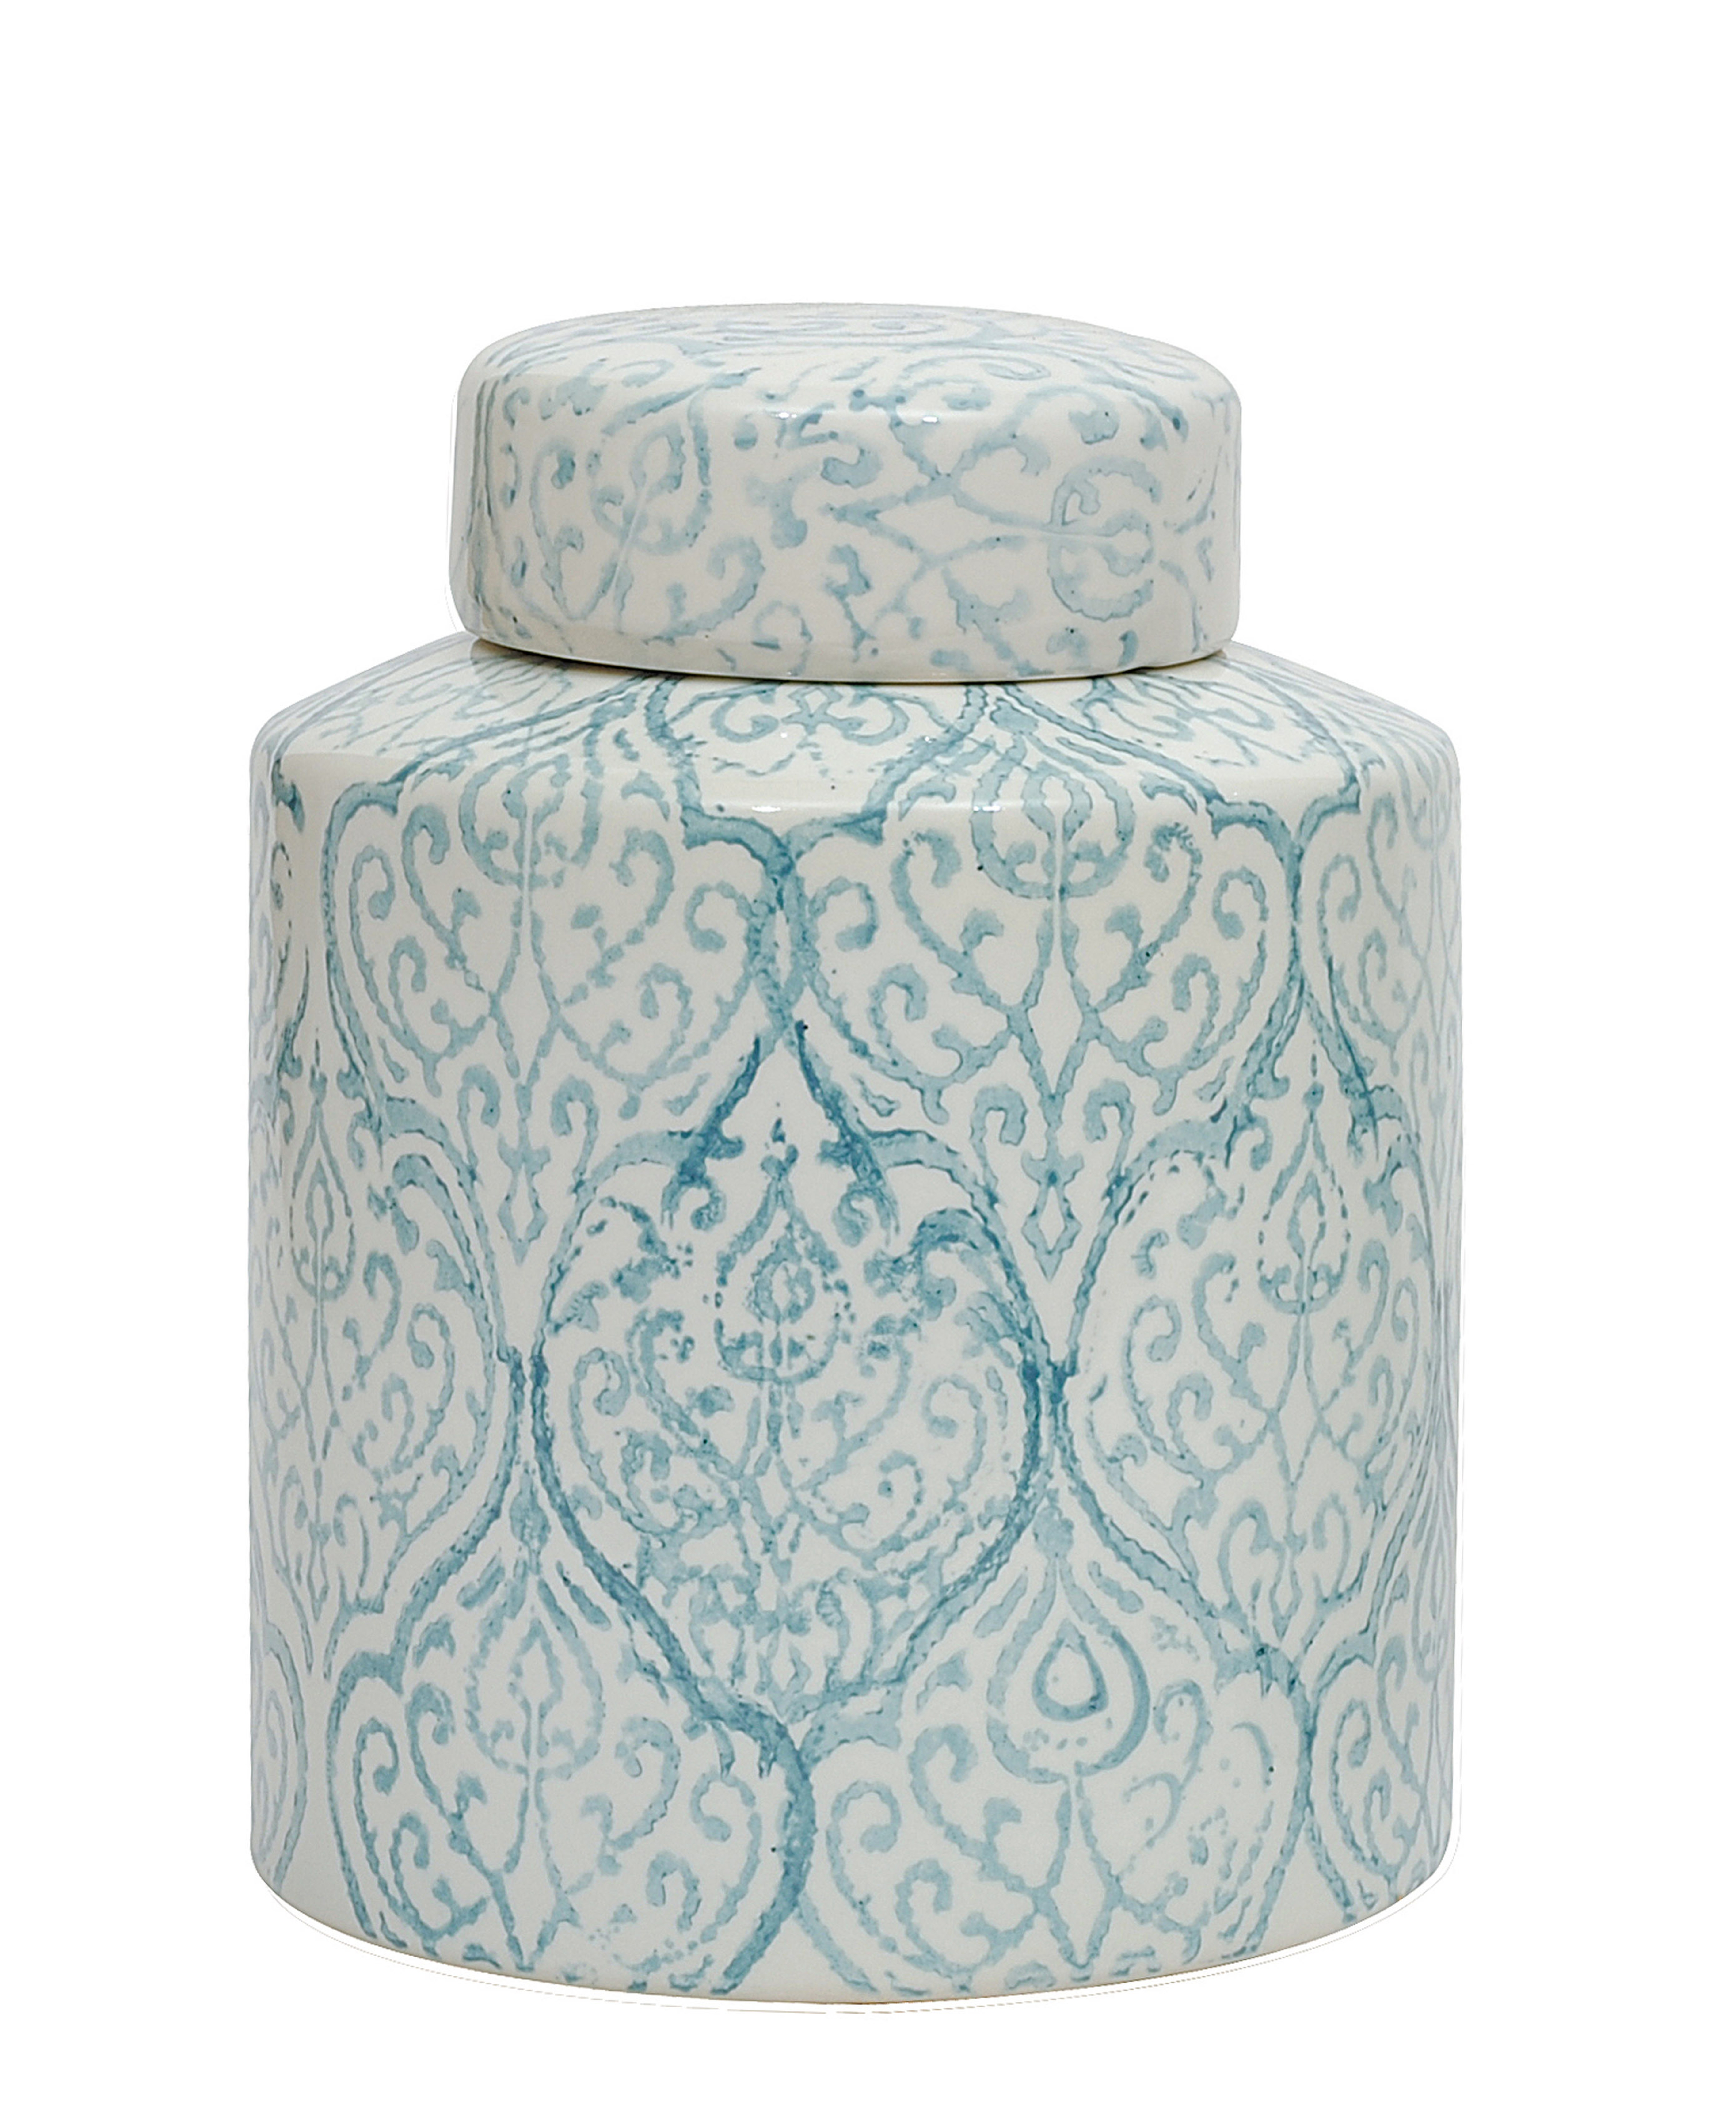 Blue & White Decorative Ceramic Ginger Jar with Lid - Nomad Home